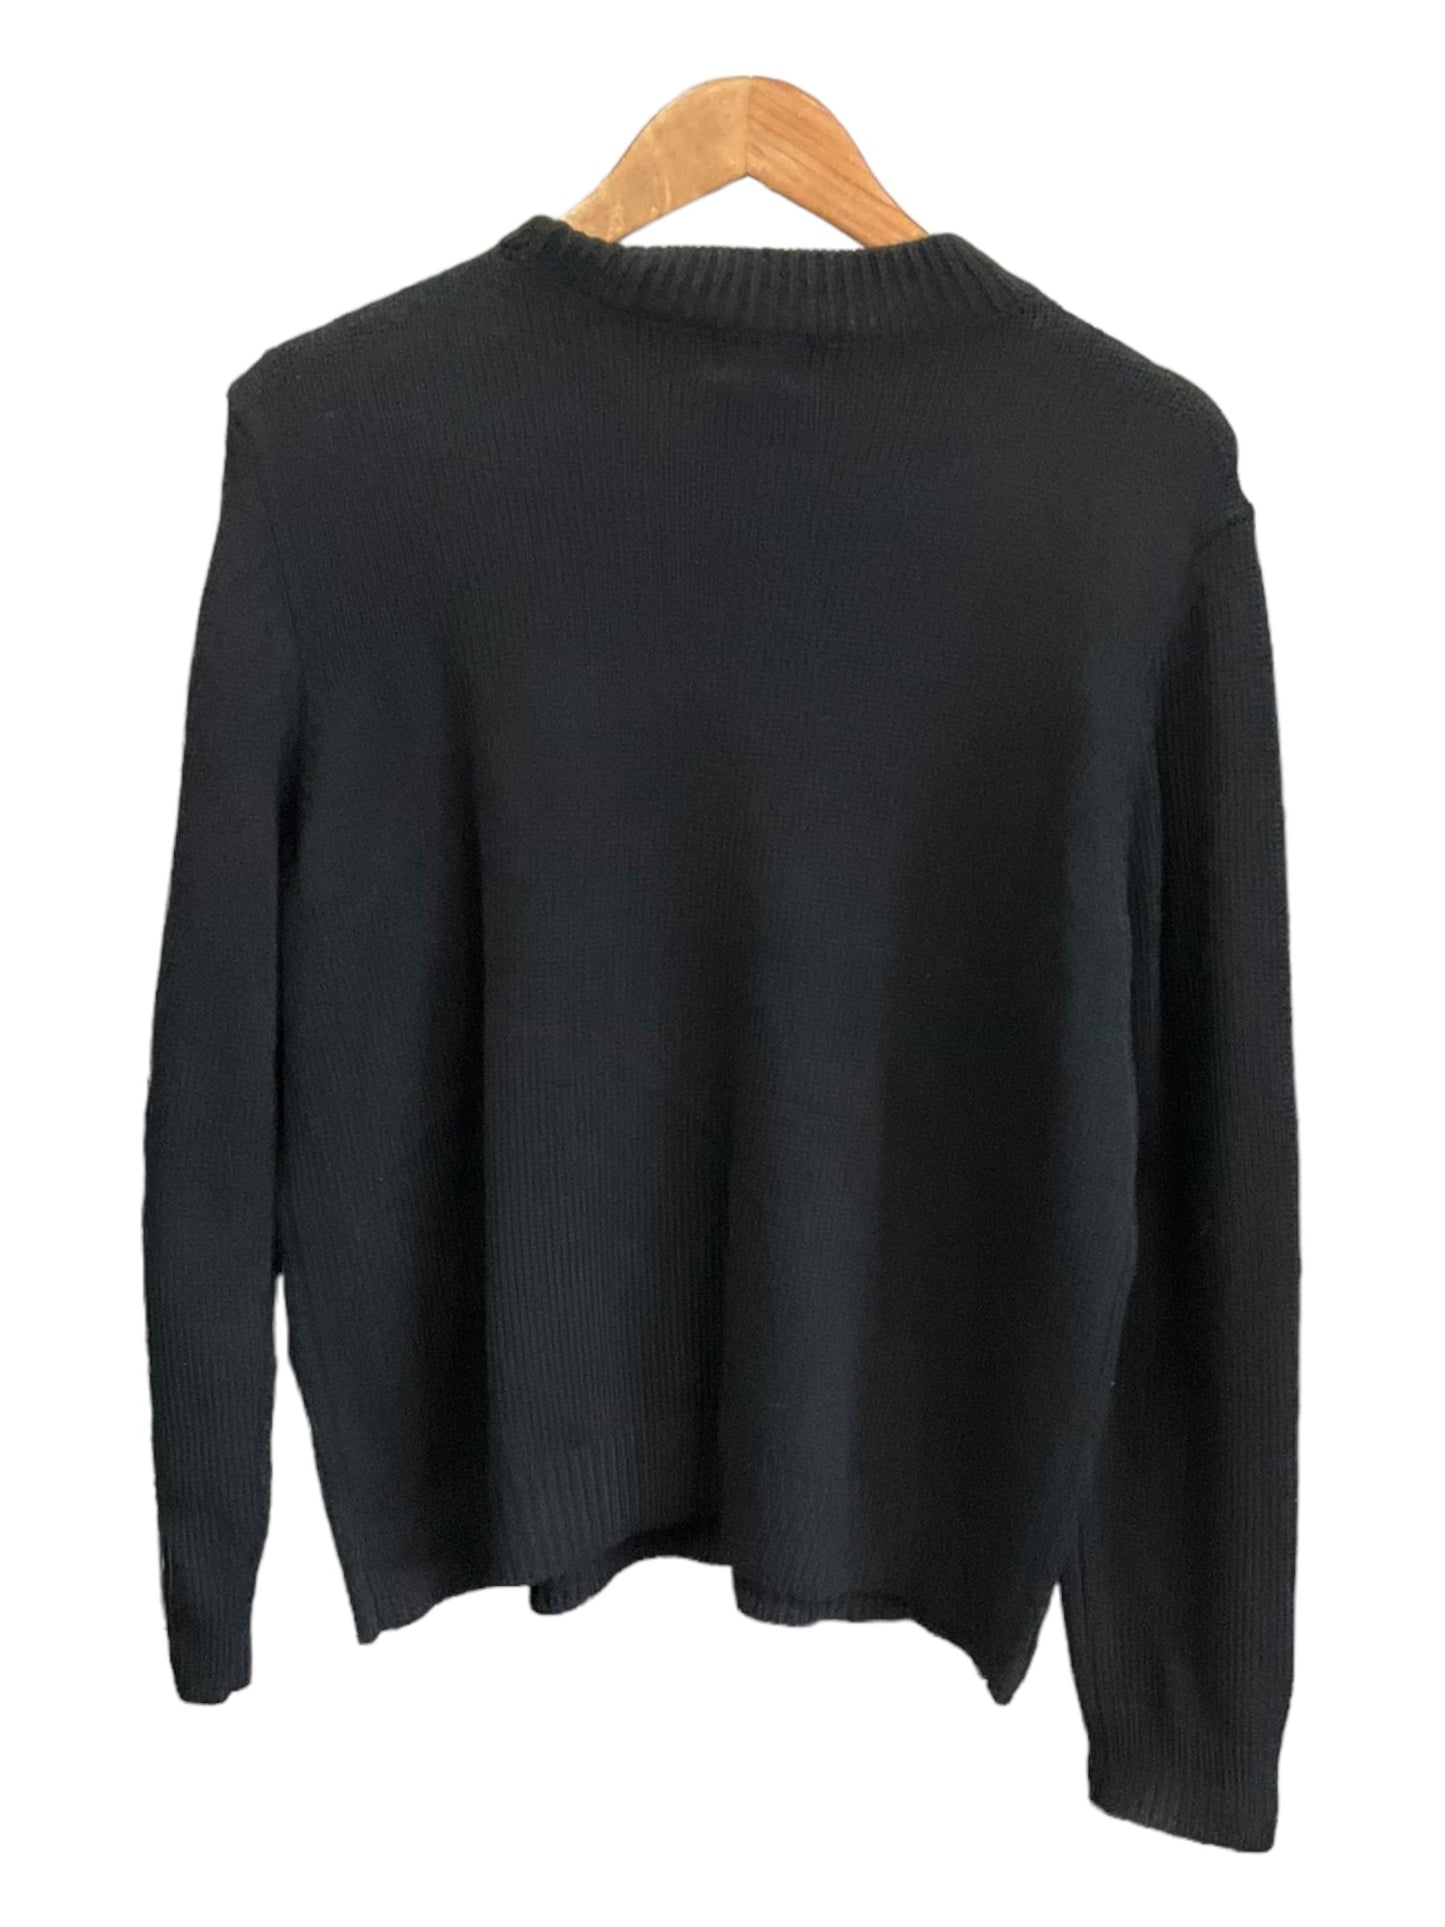 Sweater By Worthington  Size: Petite   Xl